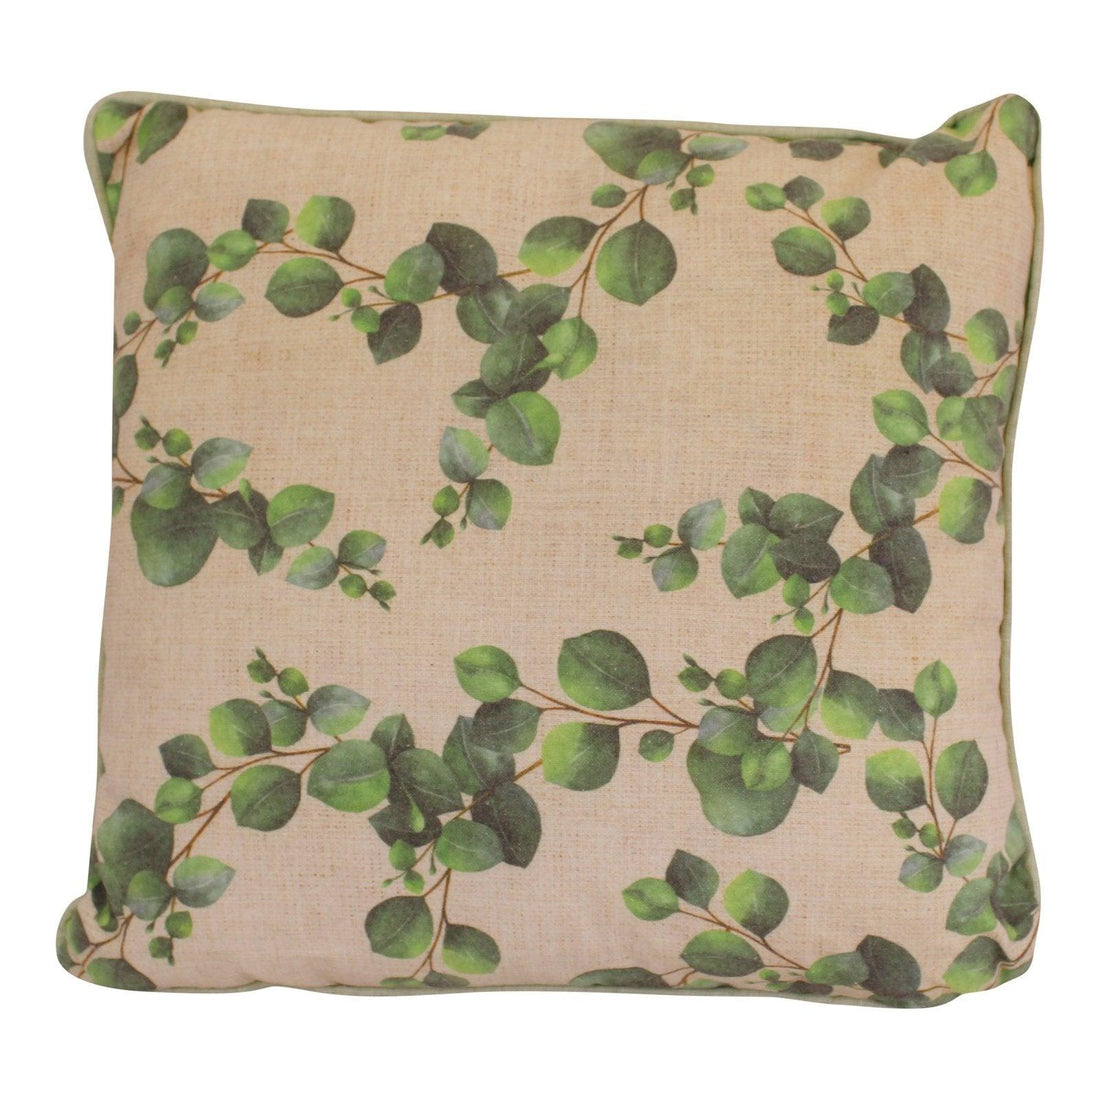 Eucalyptus Design Square Cushion, 36cm - £21.99 - Throw Pillows 